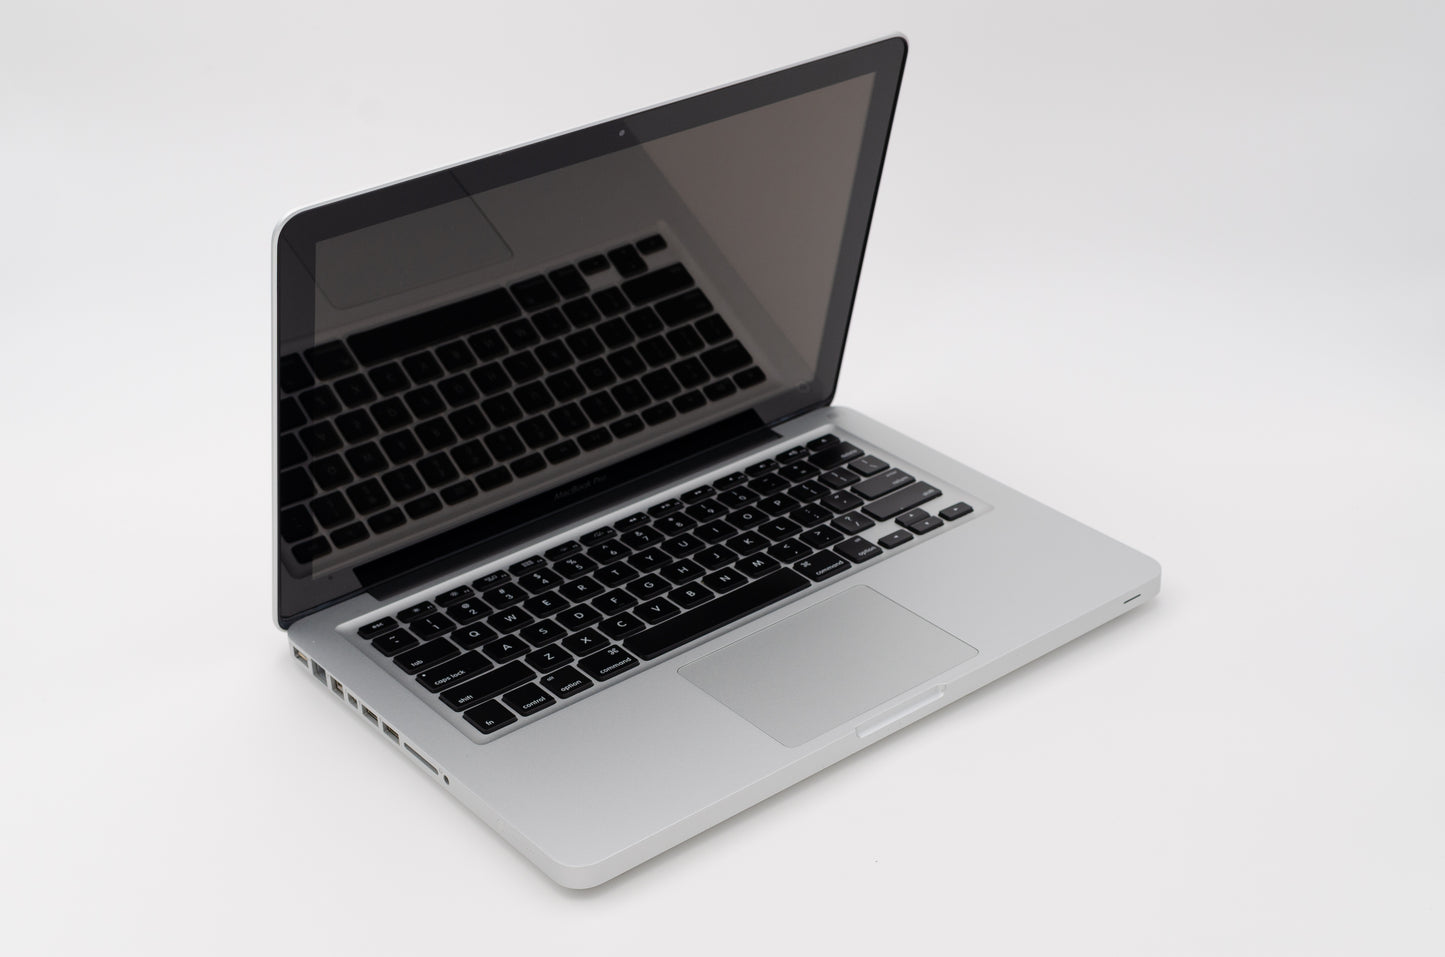 apple-early-2011-13.3-inch-macbook-pro-a1278-aluminum-dci5 - 2.3ghz processor, 4gb ram, hd 3000 - 348mb gpu-mc700ll/a-4